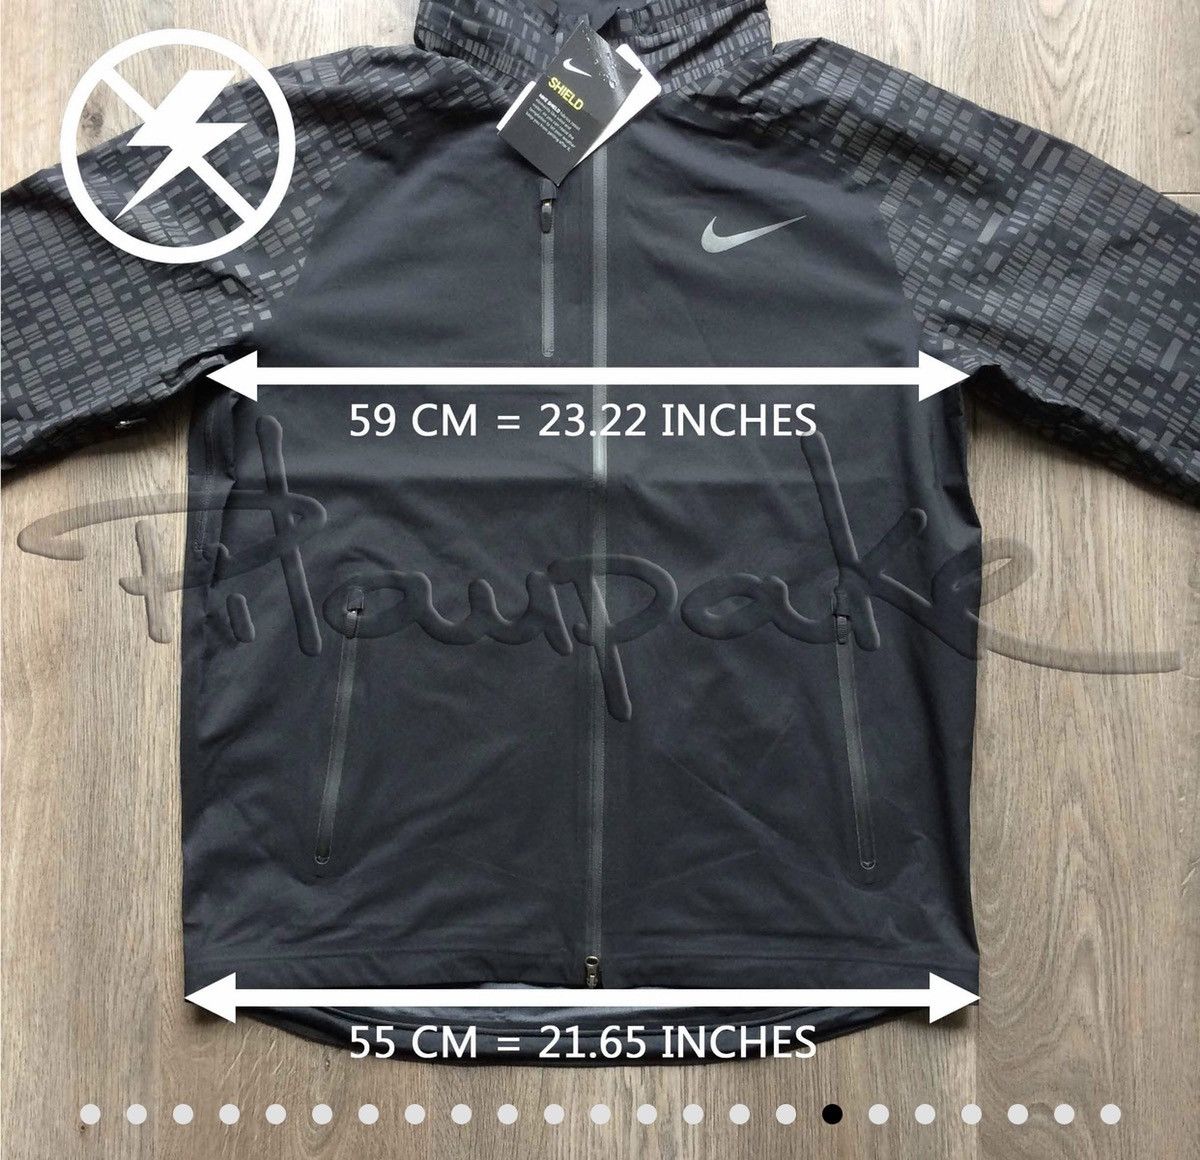 Nike Nike Hypershield Flash Running Jacket 3M Reflective Size US M / EU 48-50 / 2 - 5 Thumbnail